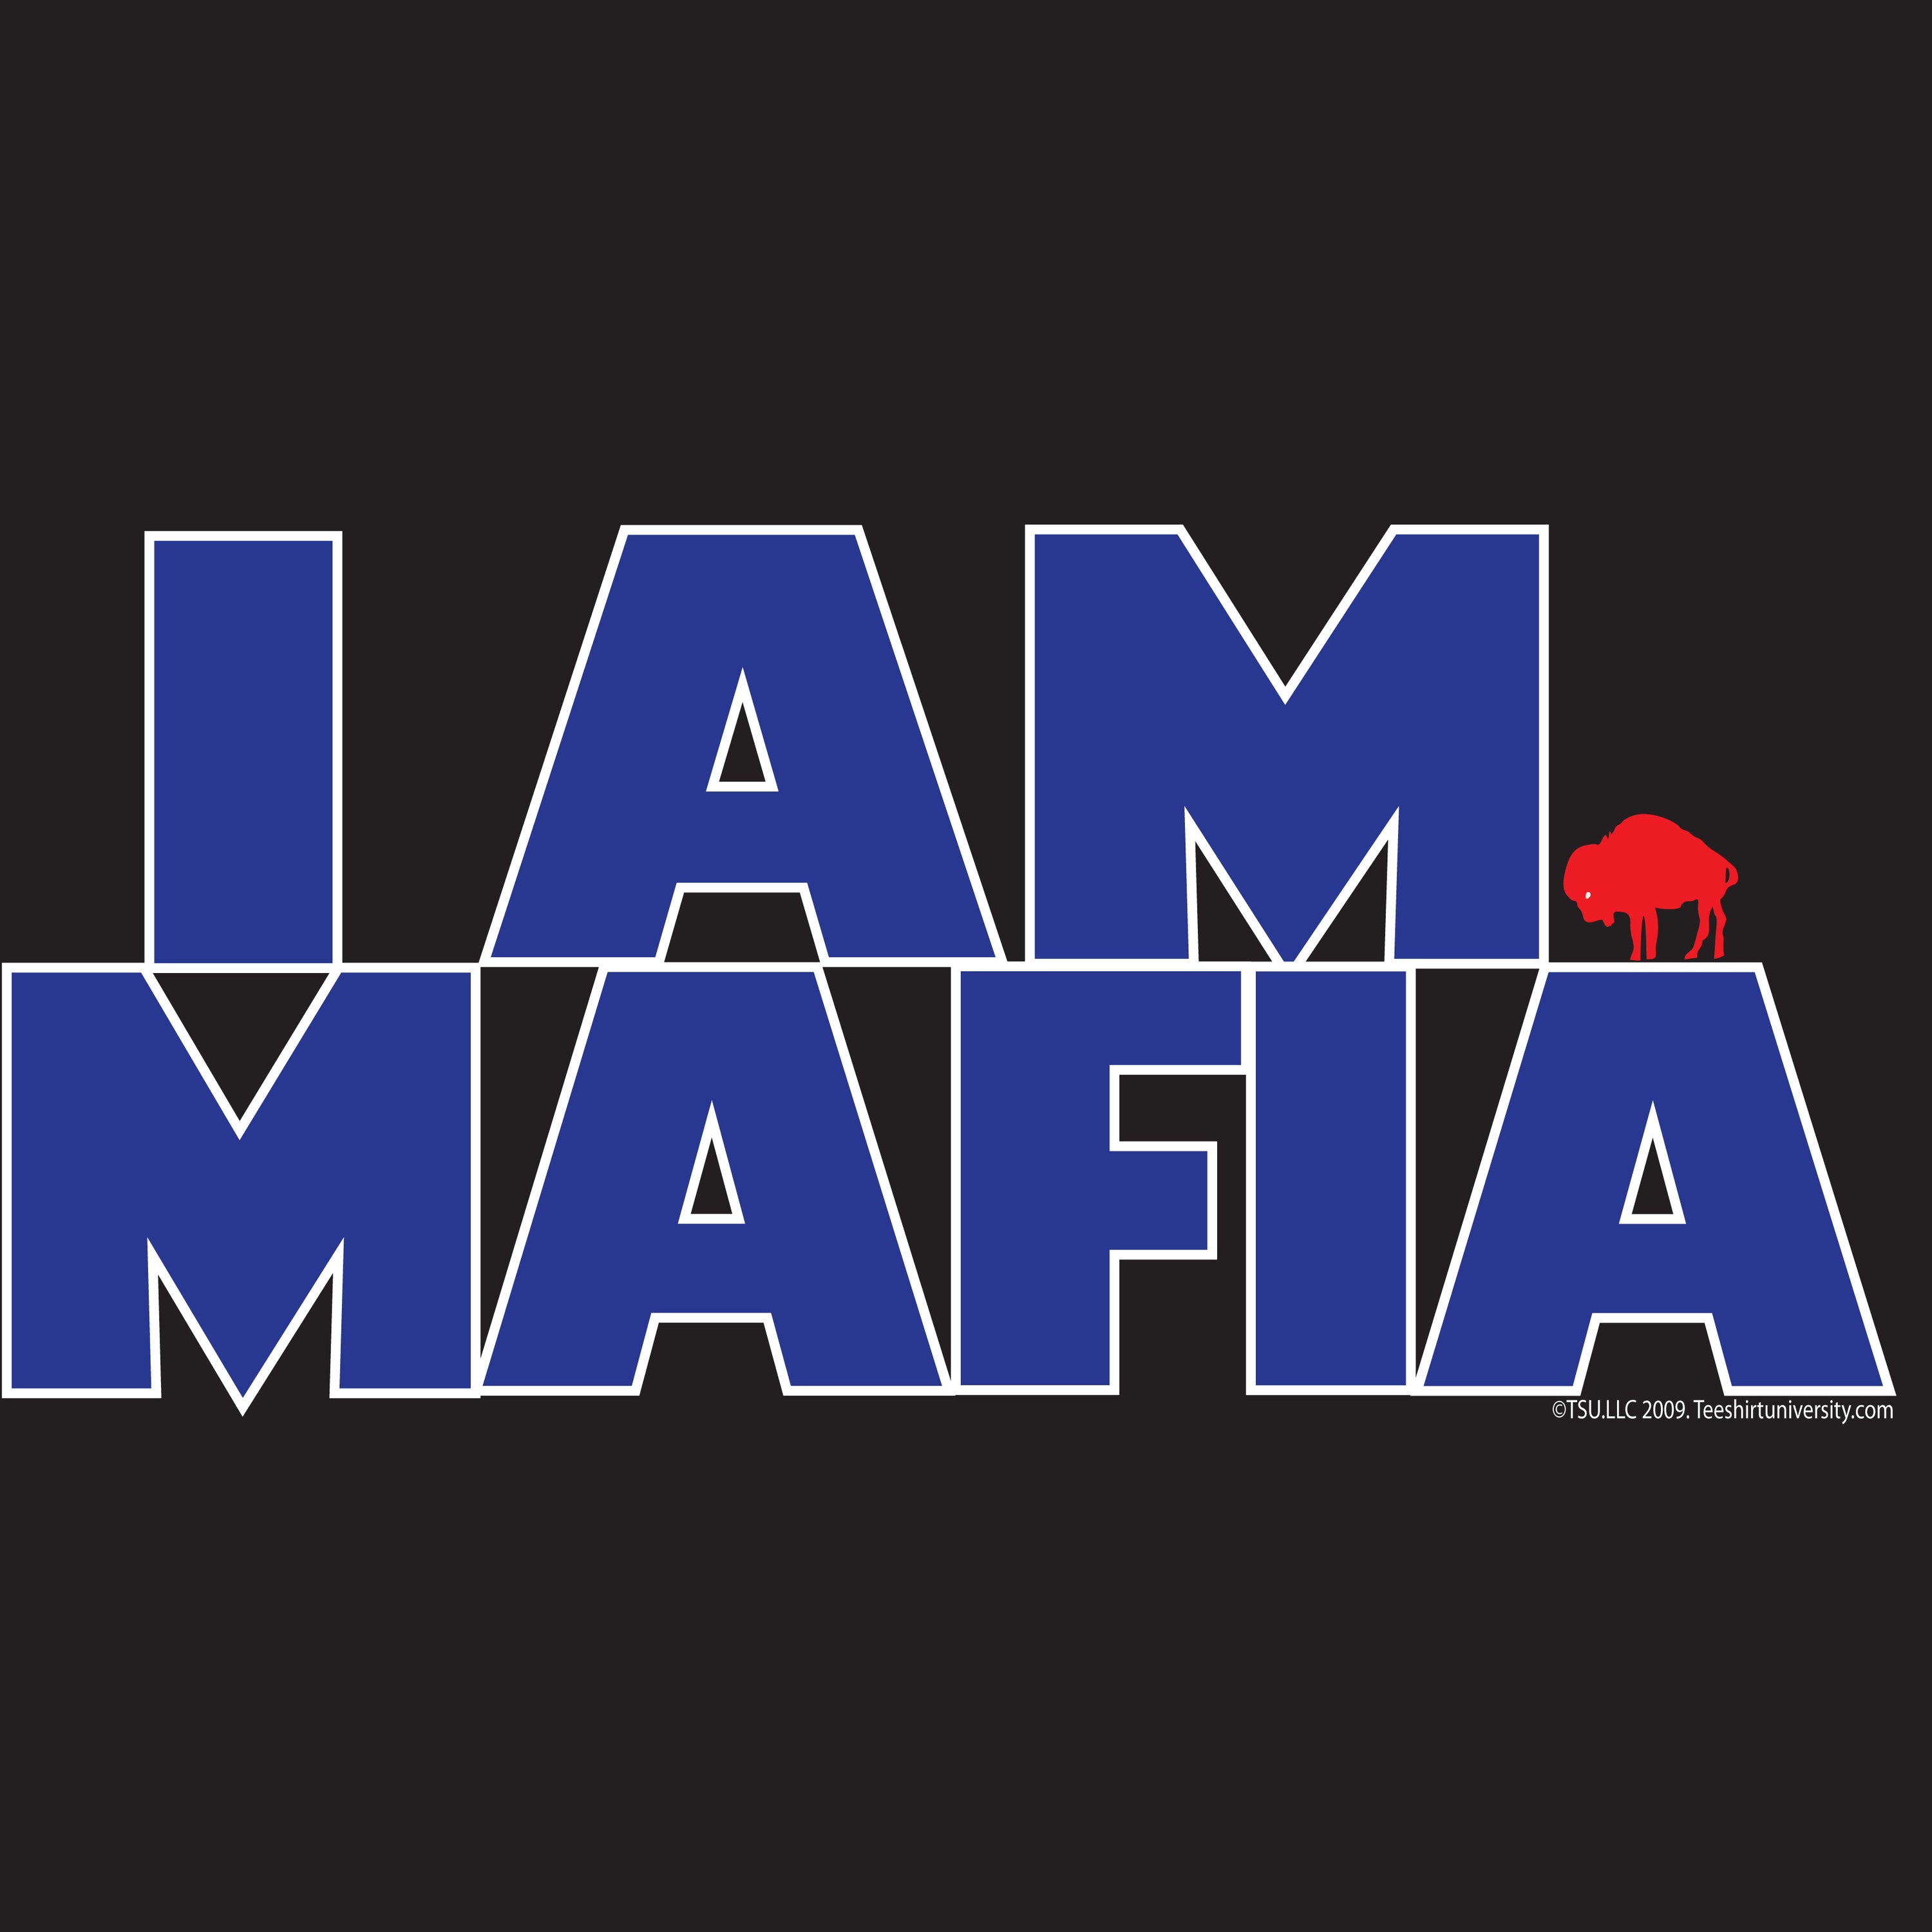 I am Mafia, Buffalo T-Shirt